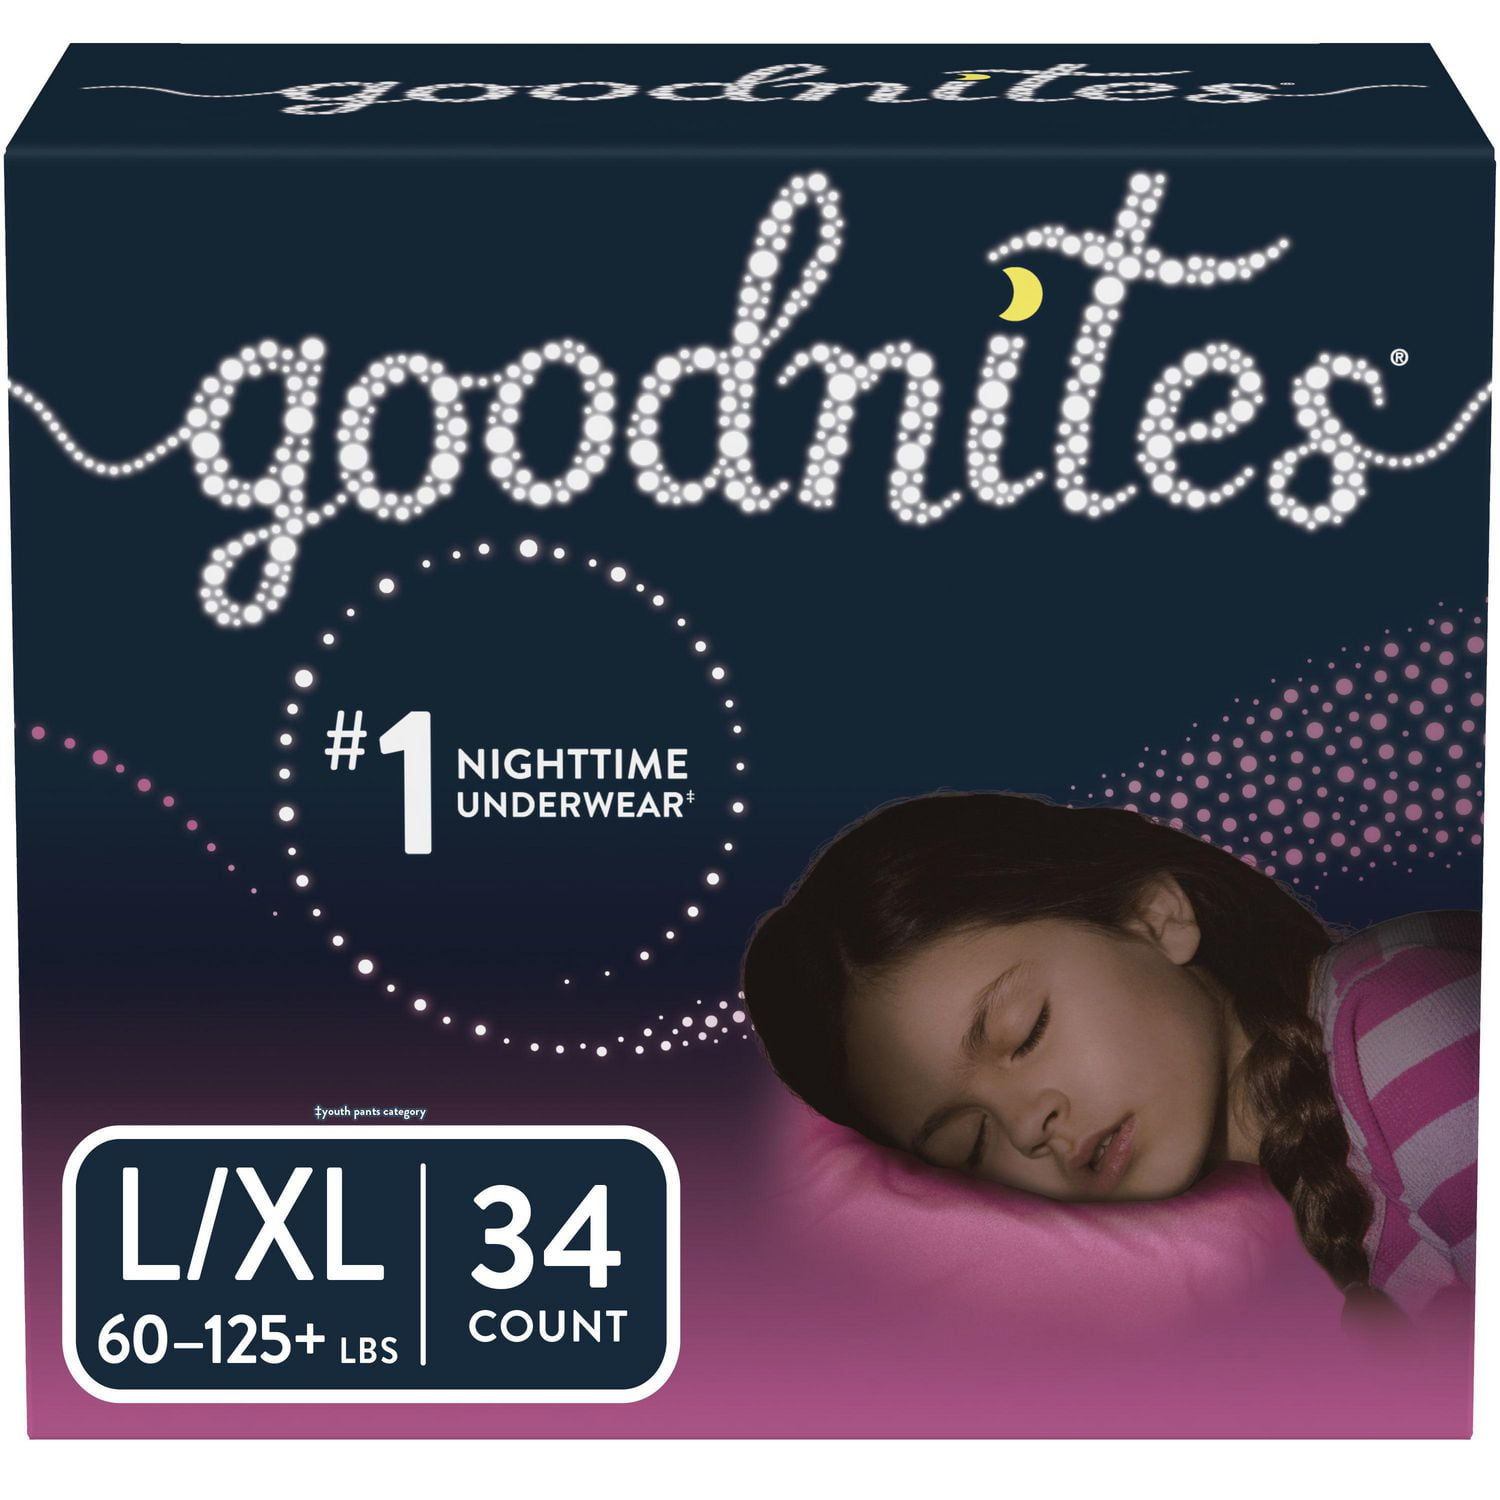 Goodnites Boys' Nighttime Bedwetting Underwear, S/M, Large, XL, 44, 34, 28  ✓